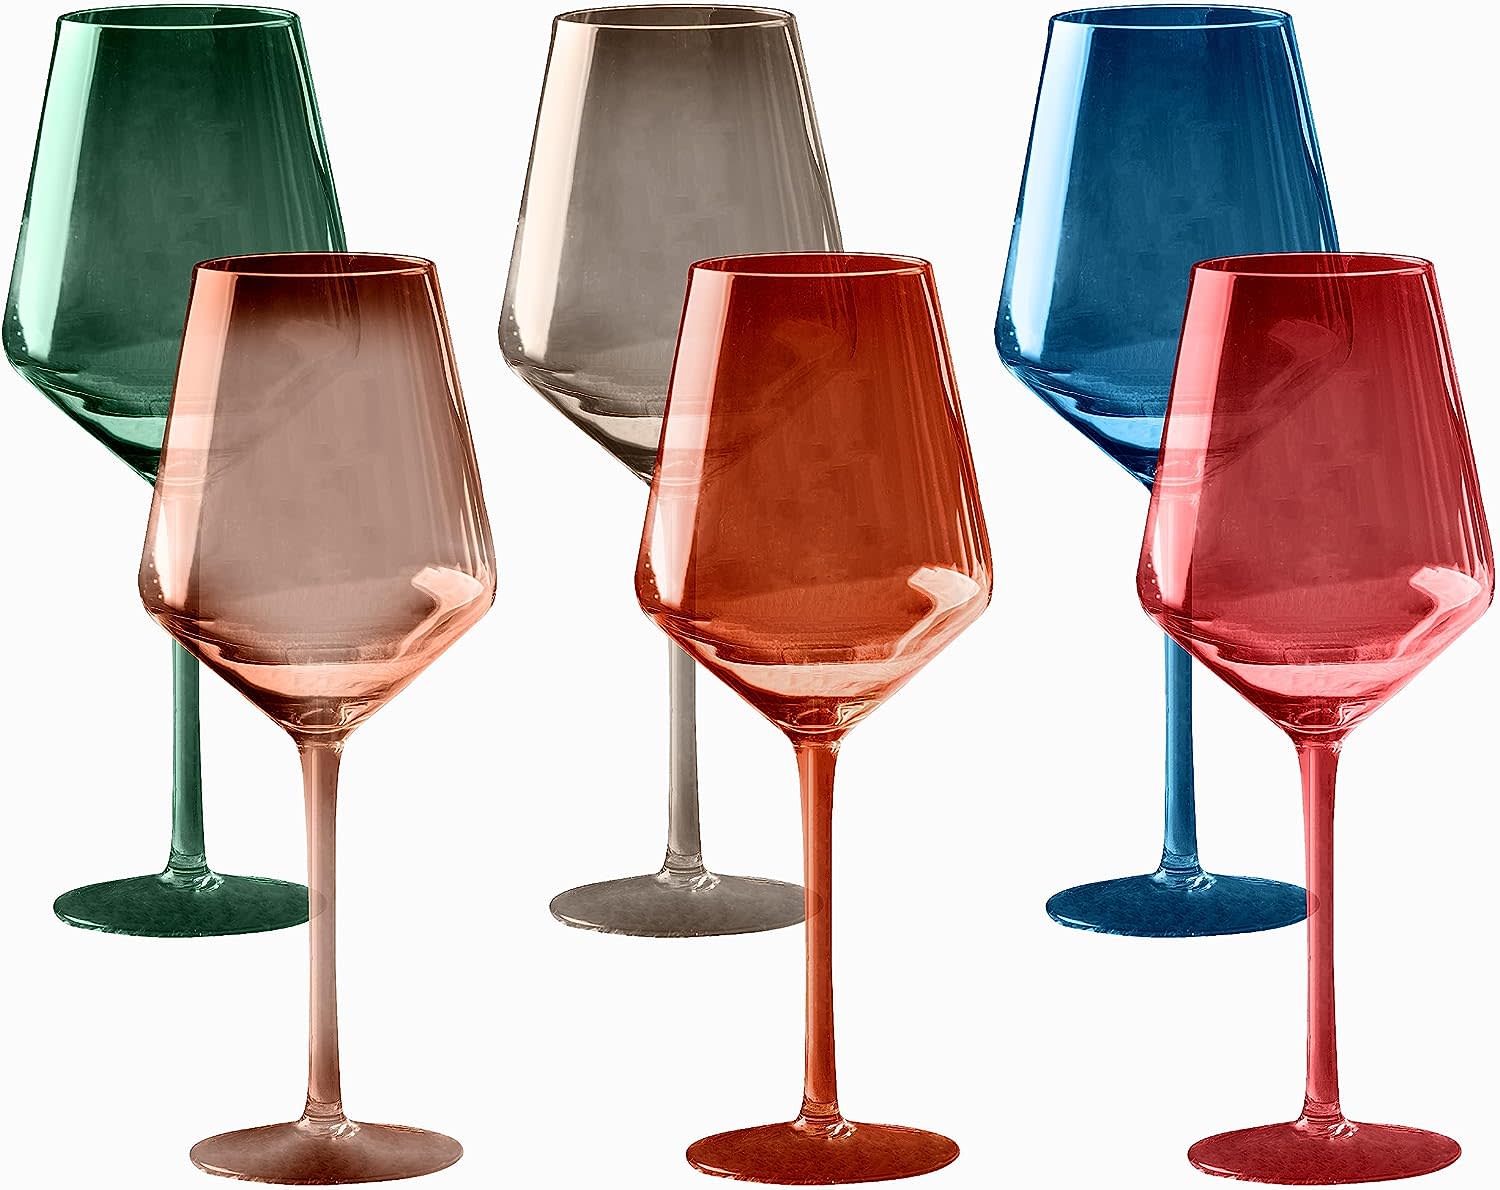 Portable Wine Glass - Get Vino To Go 